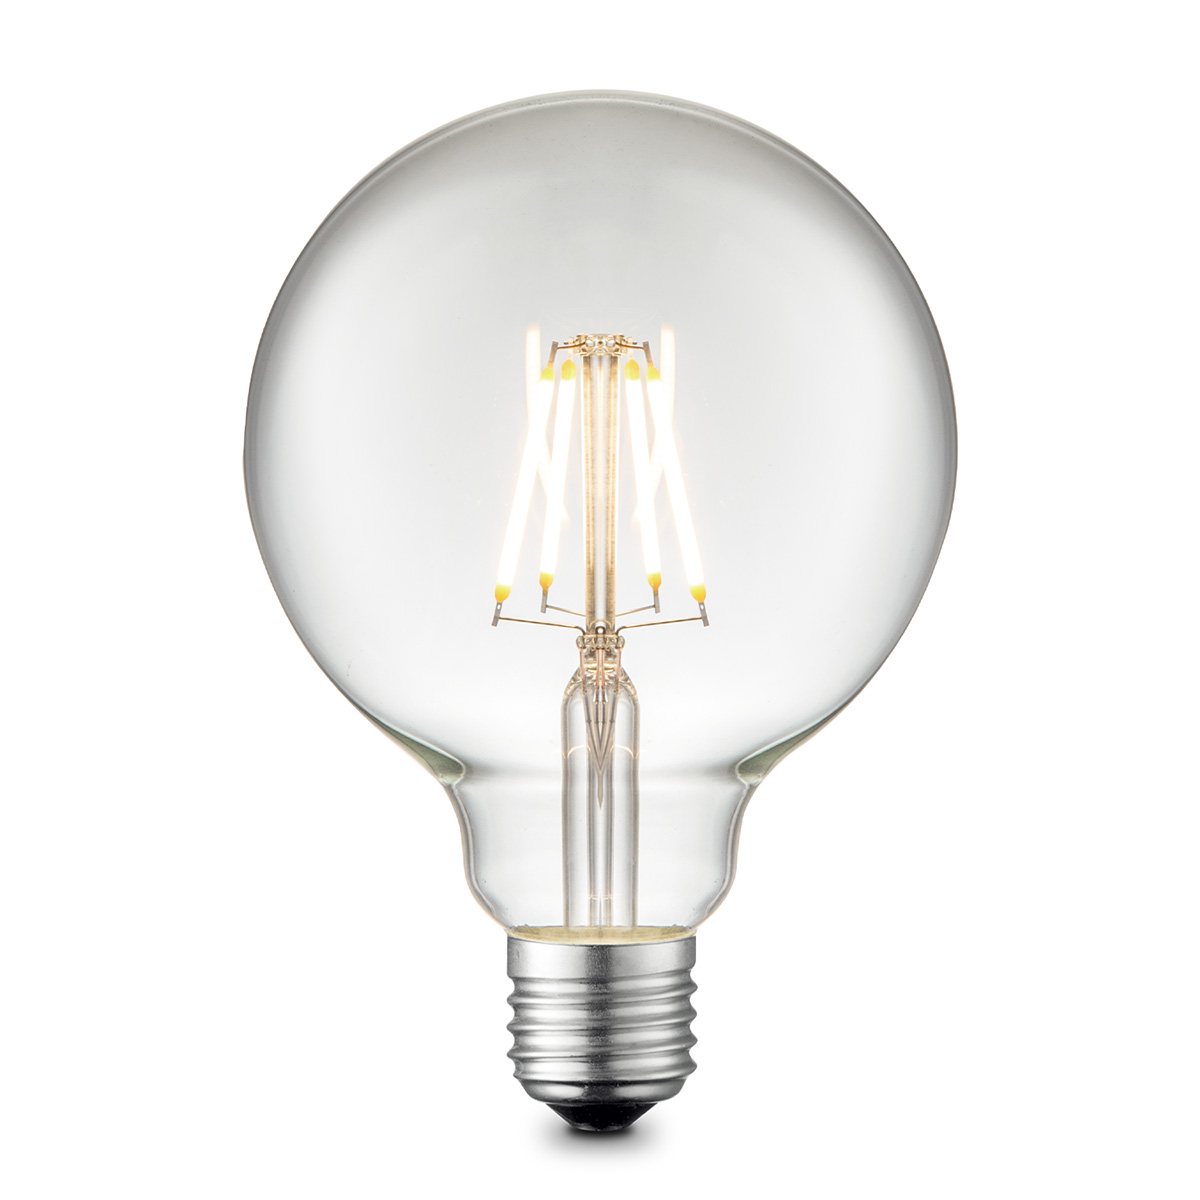 Tangla lighting - TLB-8004-04CL - LED Light Bulb Deco filament - G95 4W clear - dimmable - E27